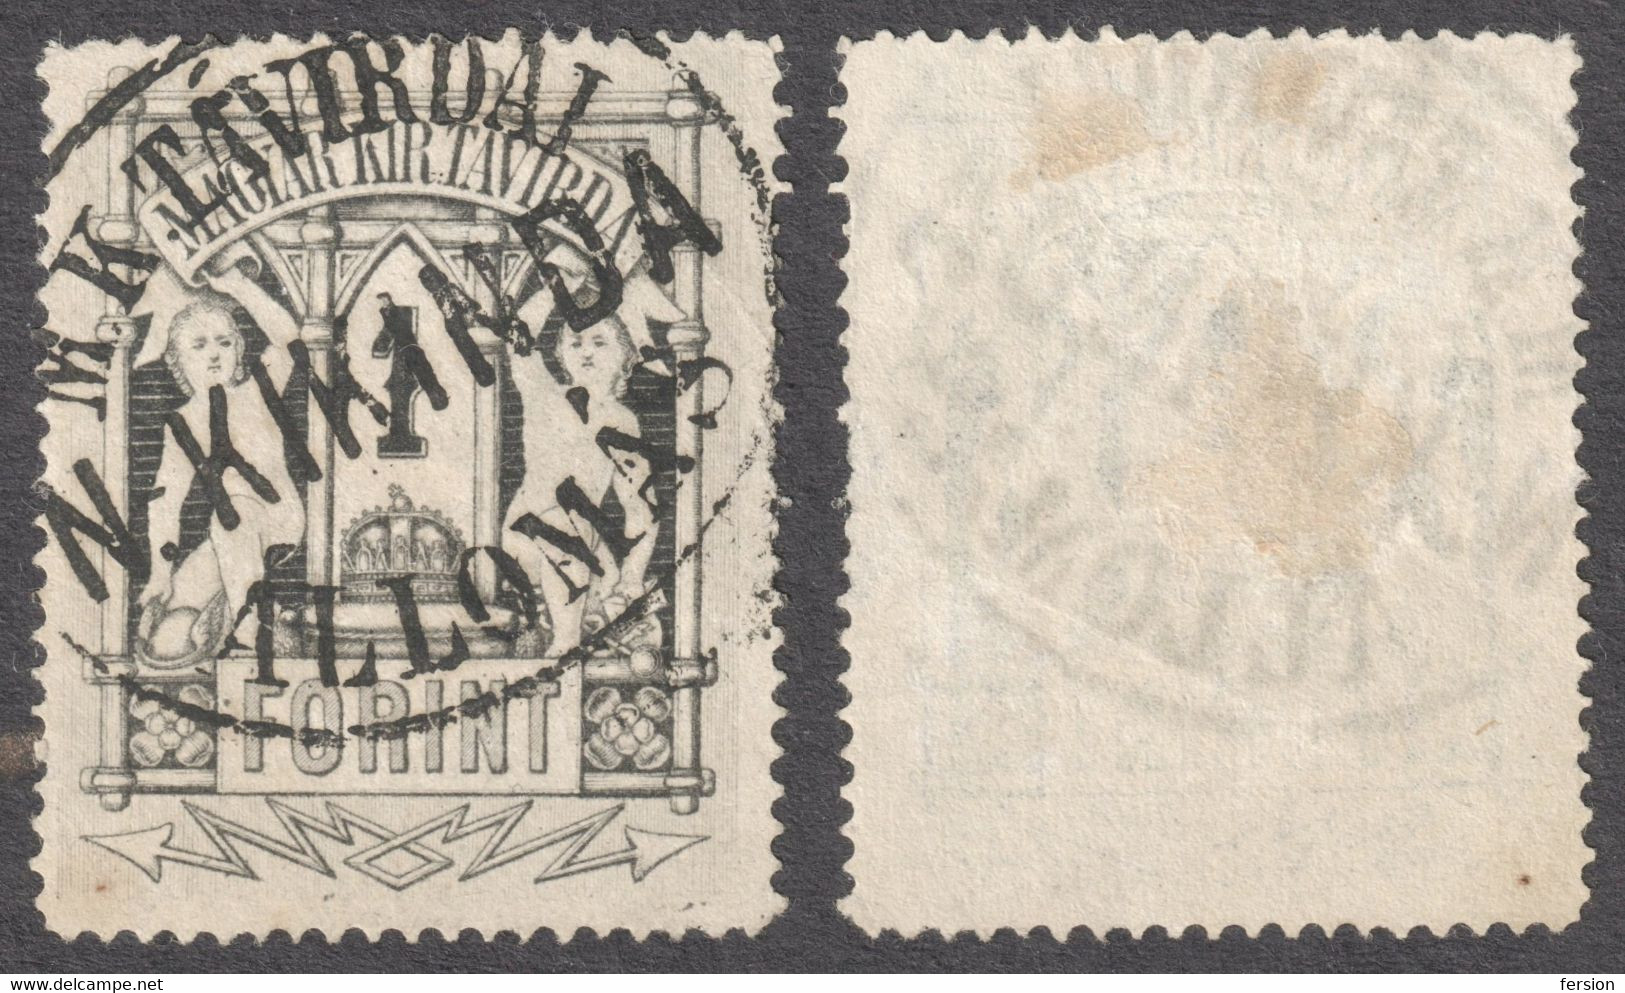 Kikinda Nagykikinda Postmark Serbia - TELEGRAPH Telegram TAX Stamp - 1873 HUNGARY - Copper Print 1 Ft - Used - Telegraphenmarken